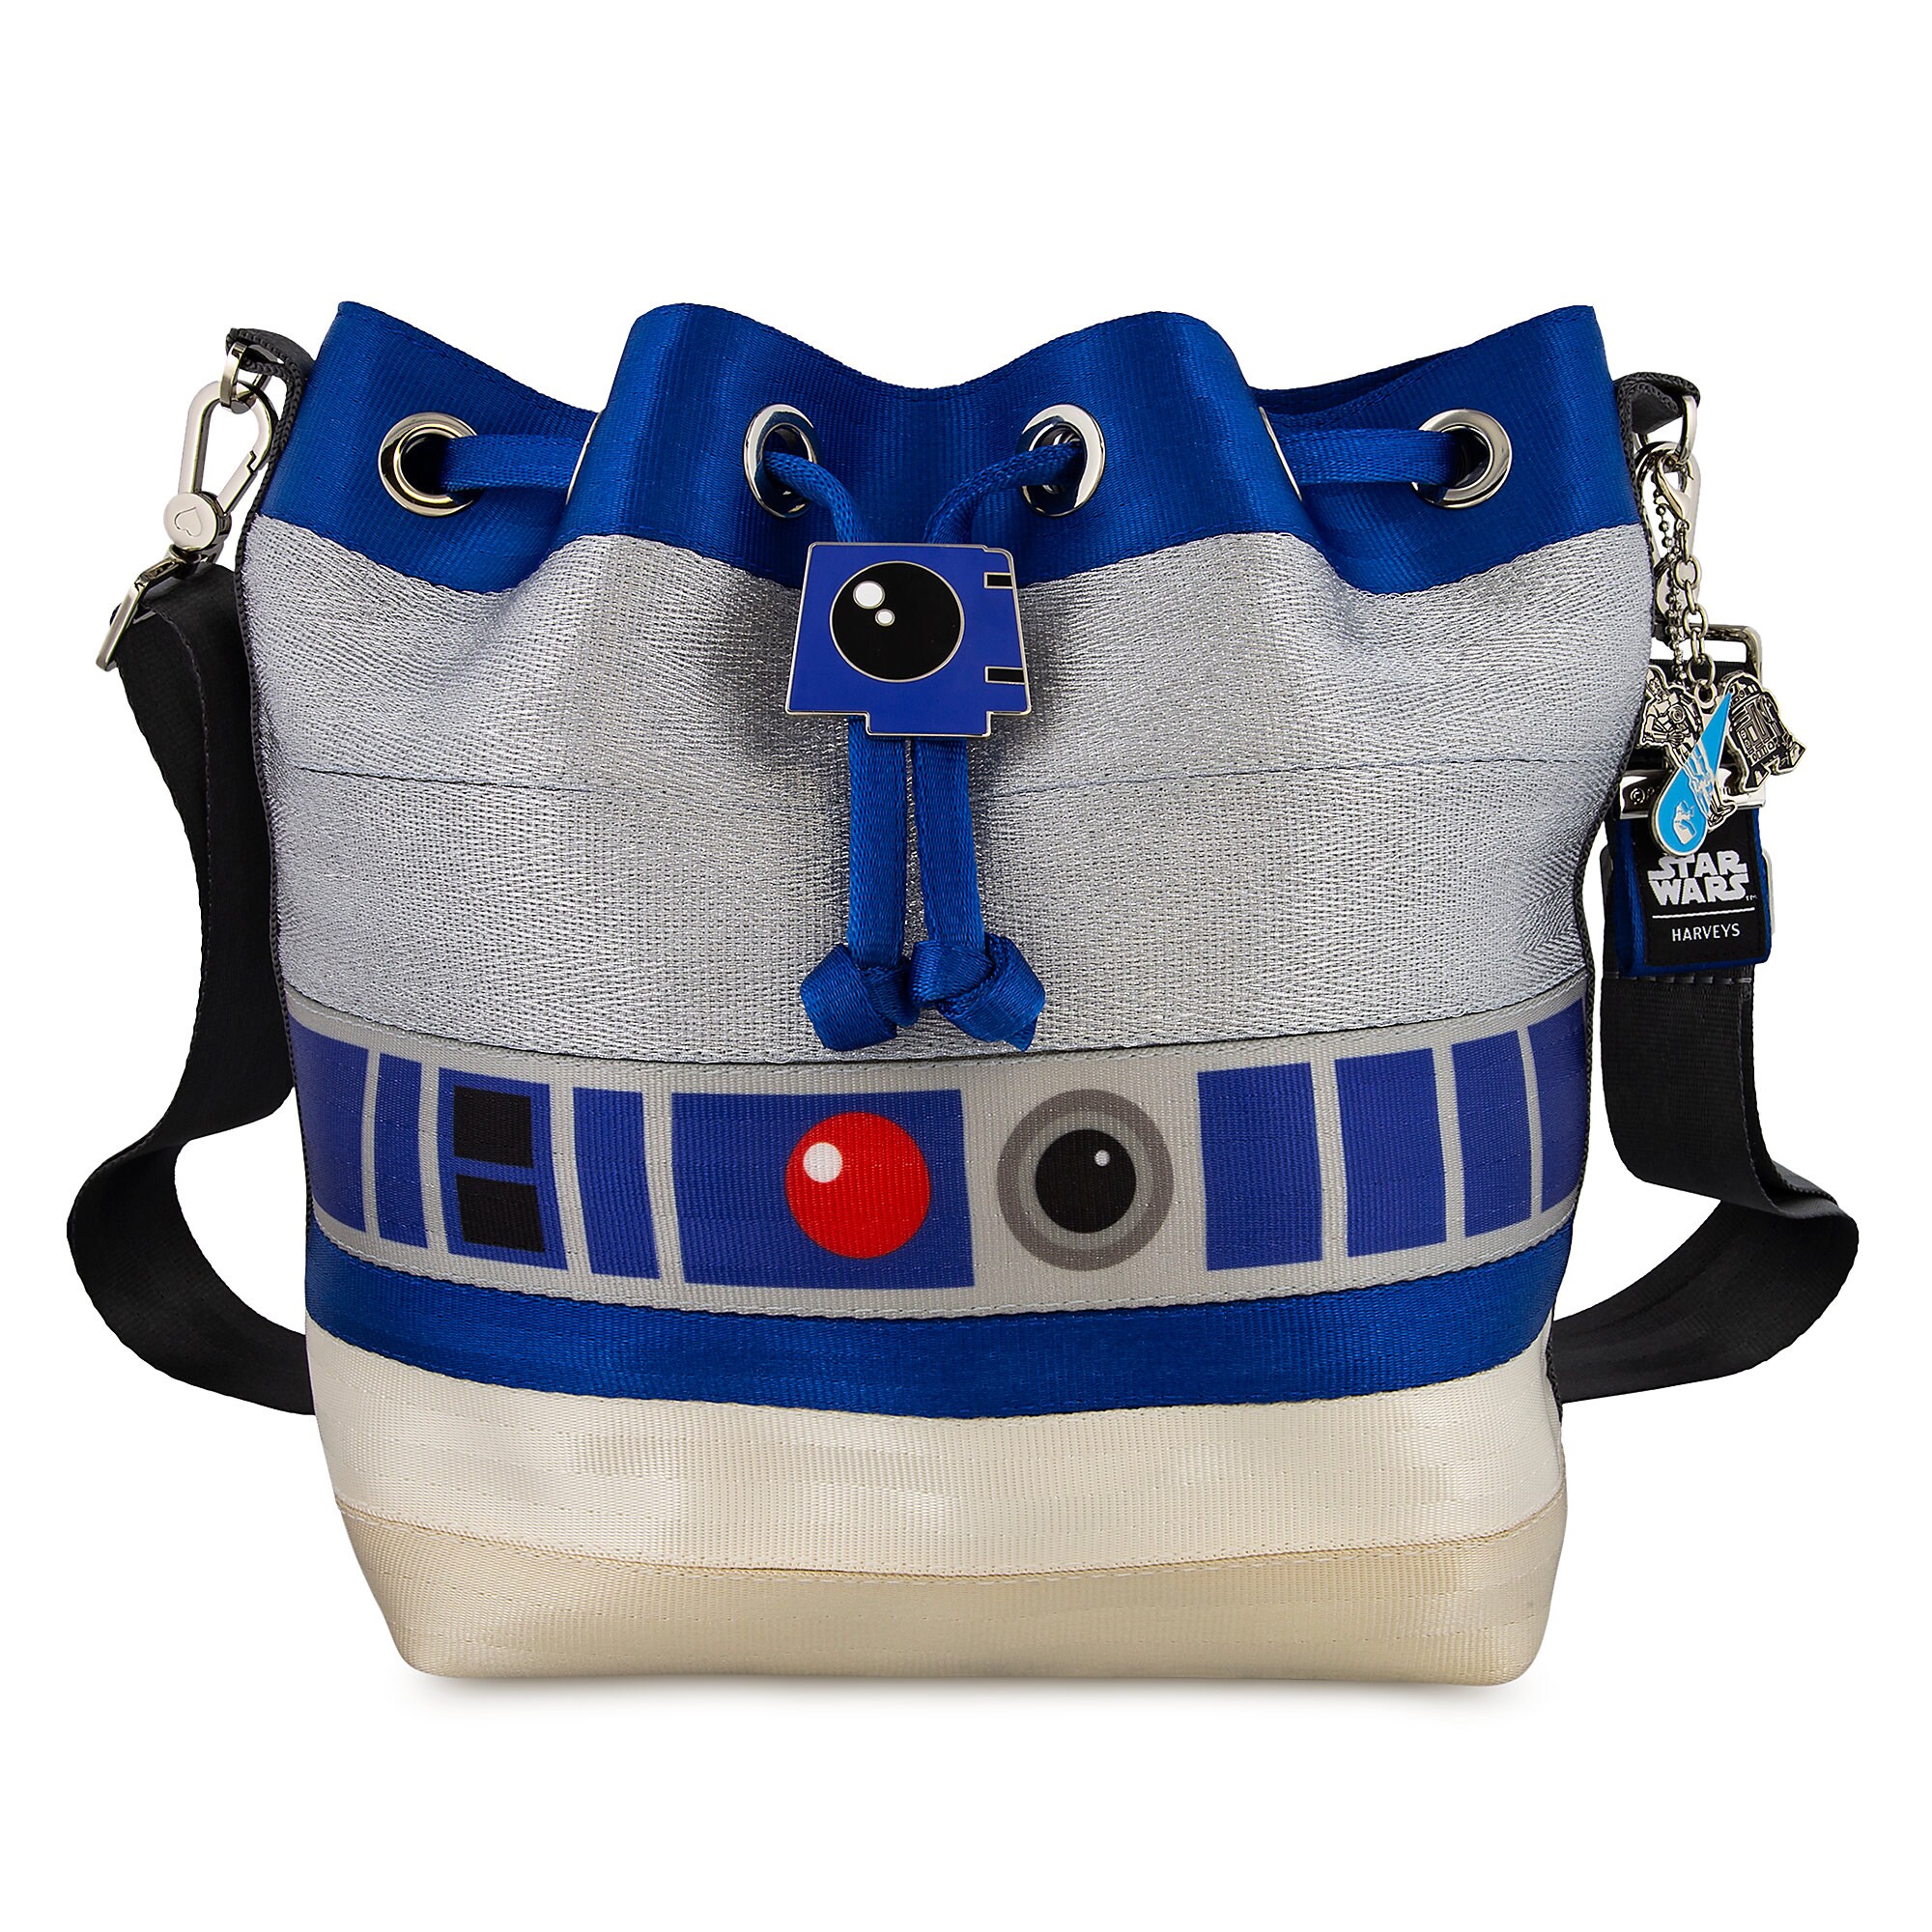 R2-D2 Park Hopper Bag by Harveys - Star Wars